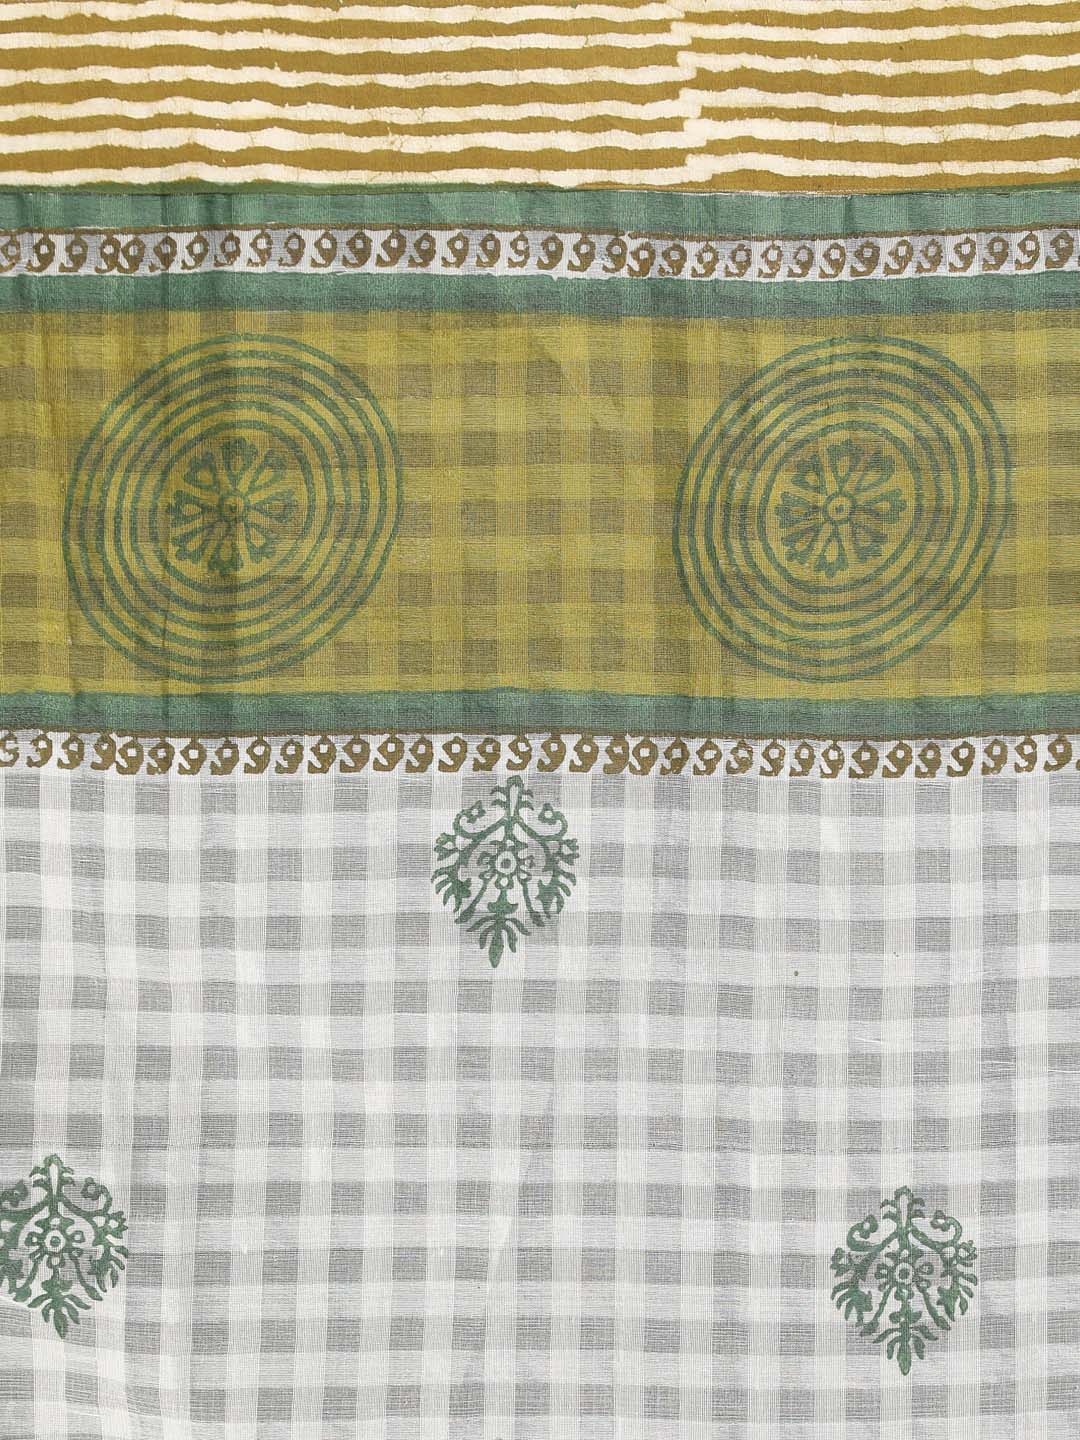 Indethnic Printed Cotton Blend Saree in green - Saree Detail View